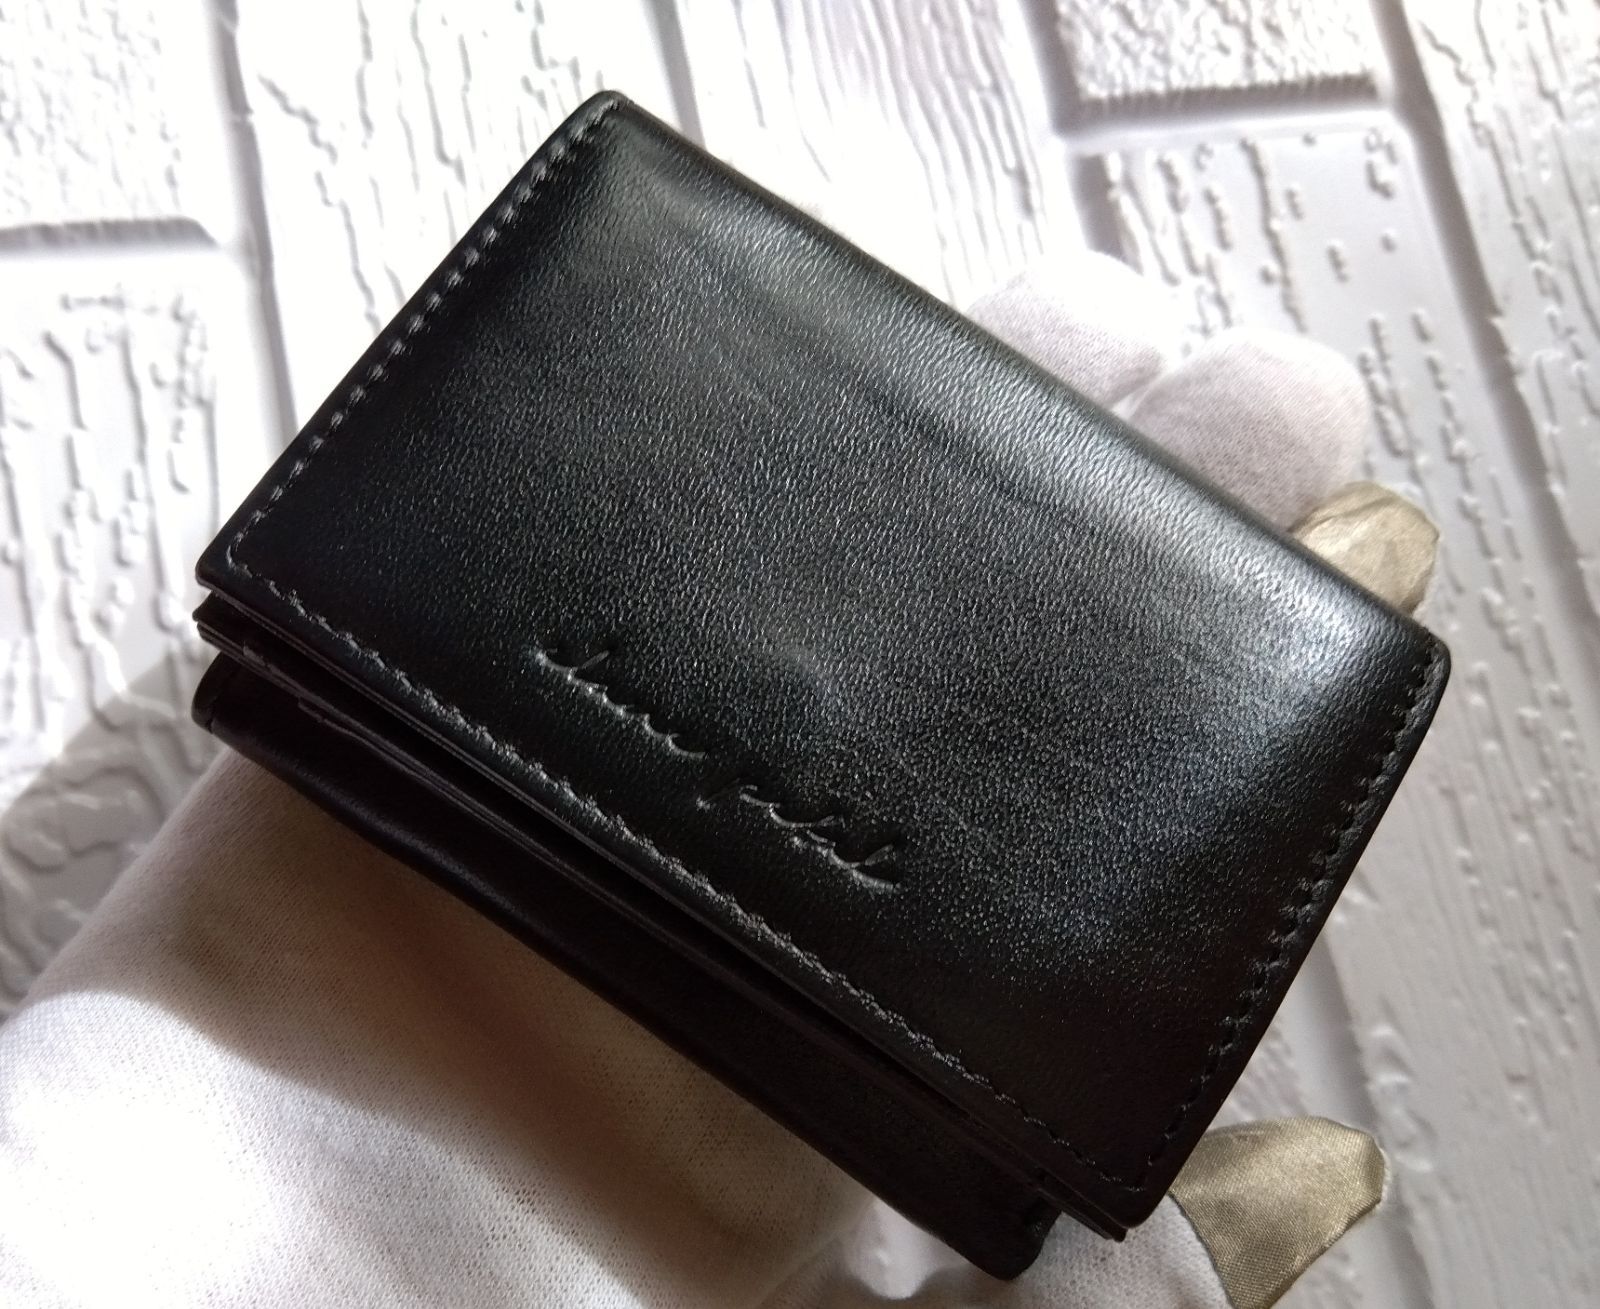 CLANE／三つ折り財布